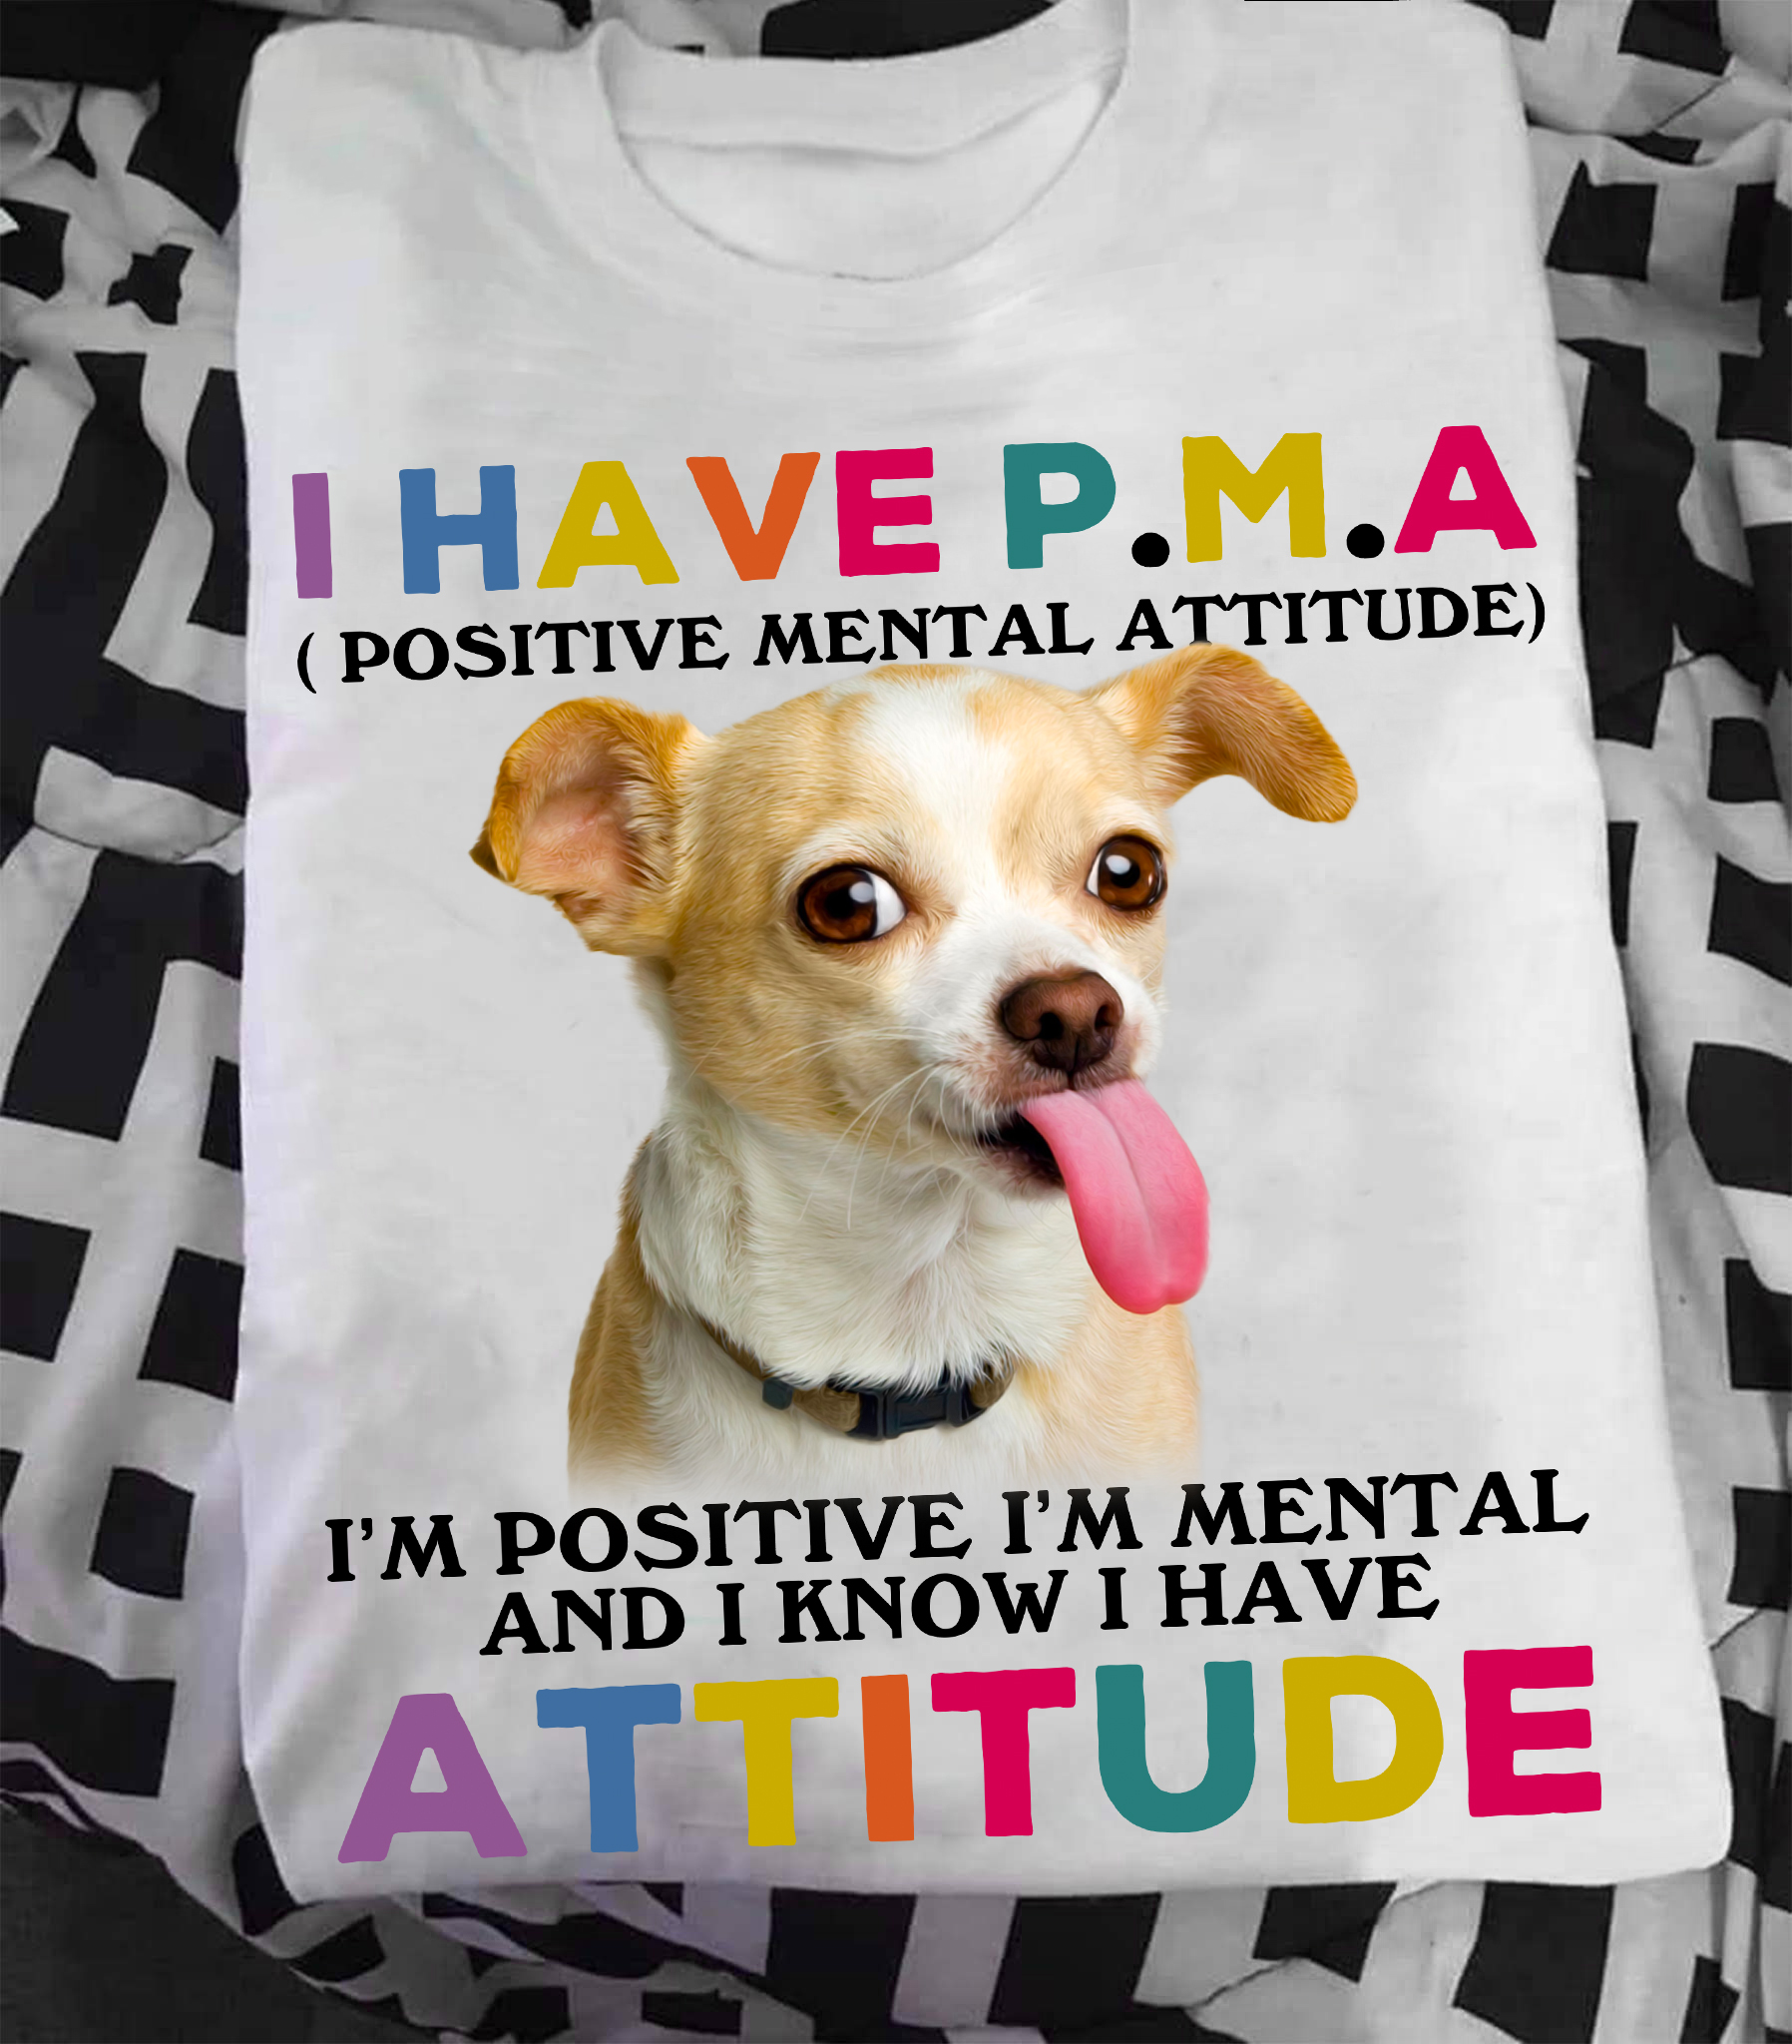 I have Positive mental attitude I'm positive I'm mental and I know I have attitude - Chihuahua dog